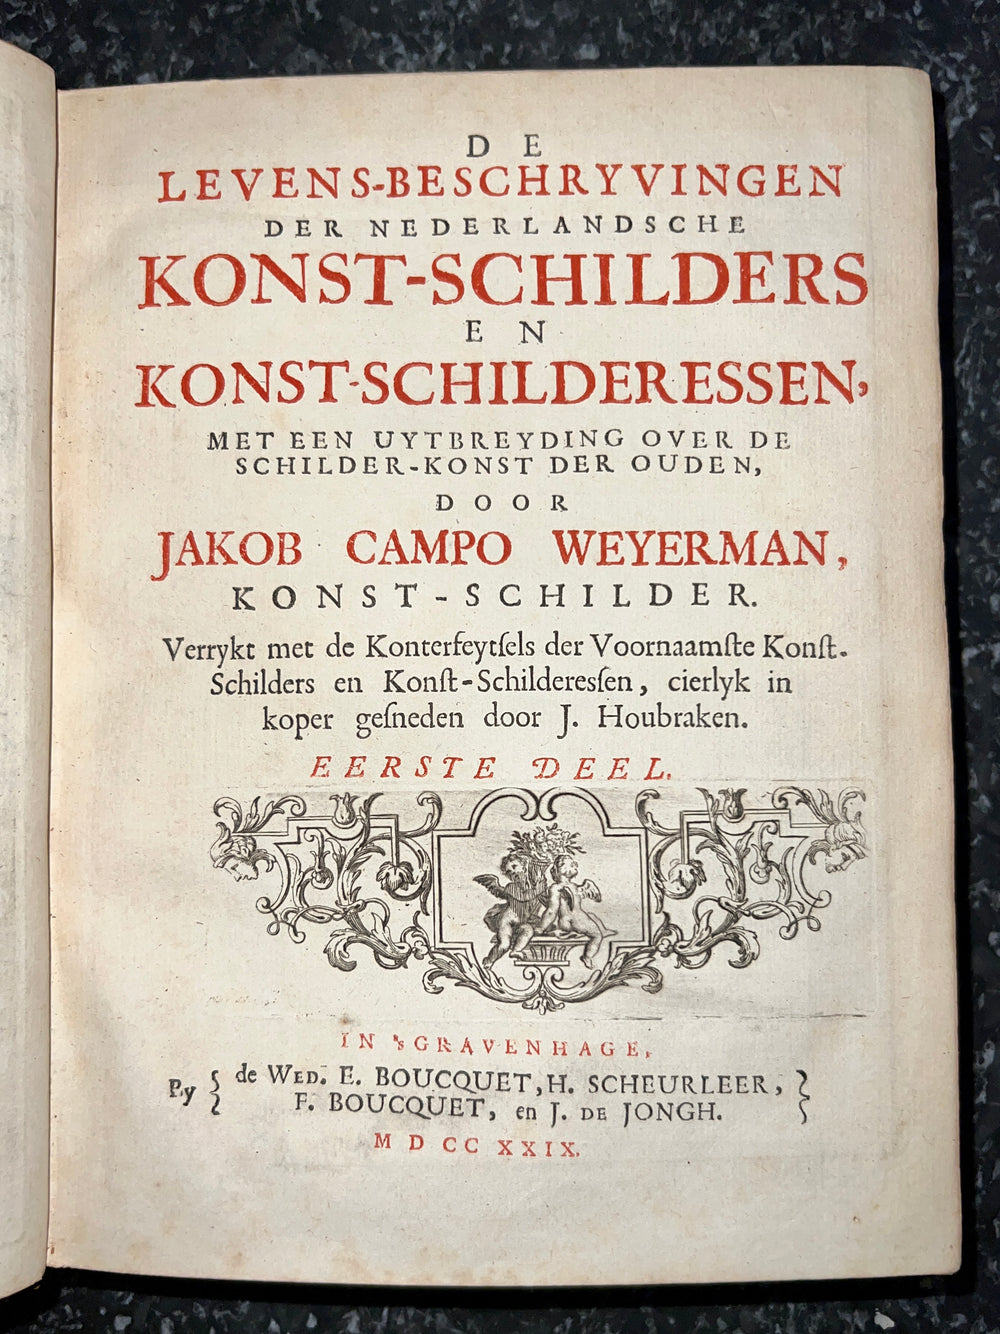 WEYERMAN, Jacob Campo. The life descriptions of the Dutch art painters